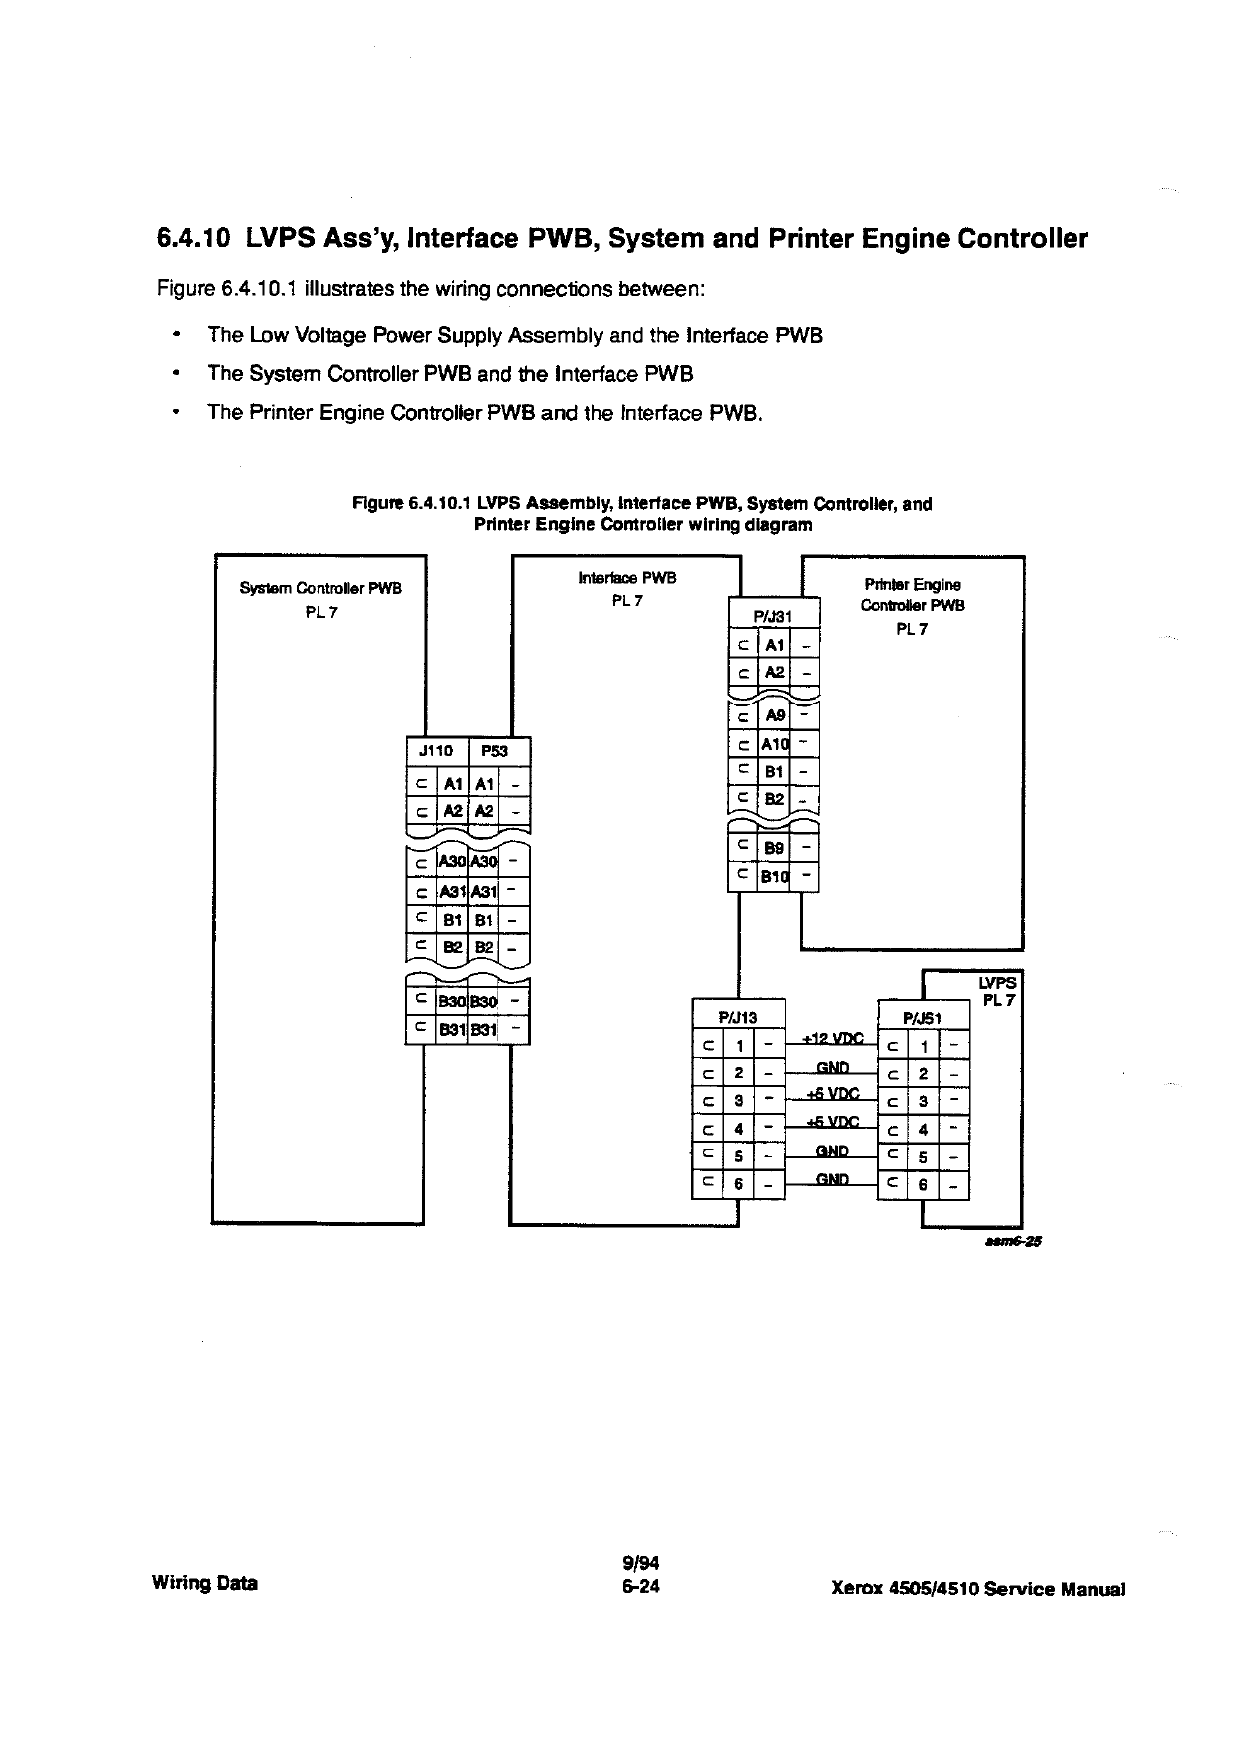 Xerox DocuPrint 4505 4510 Parts List and Service Manual-6